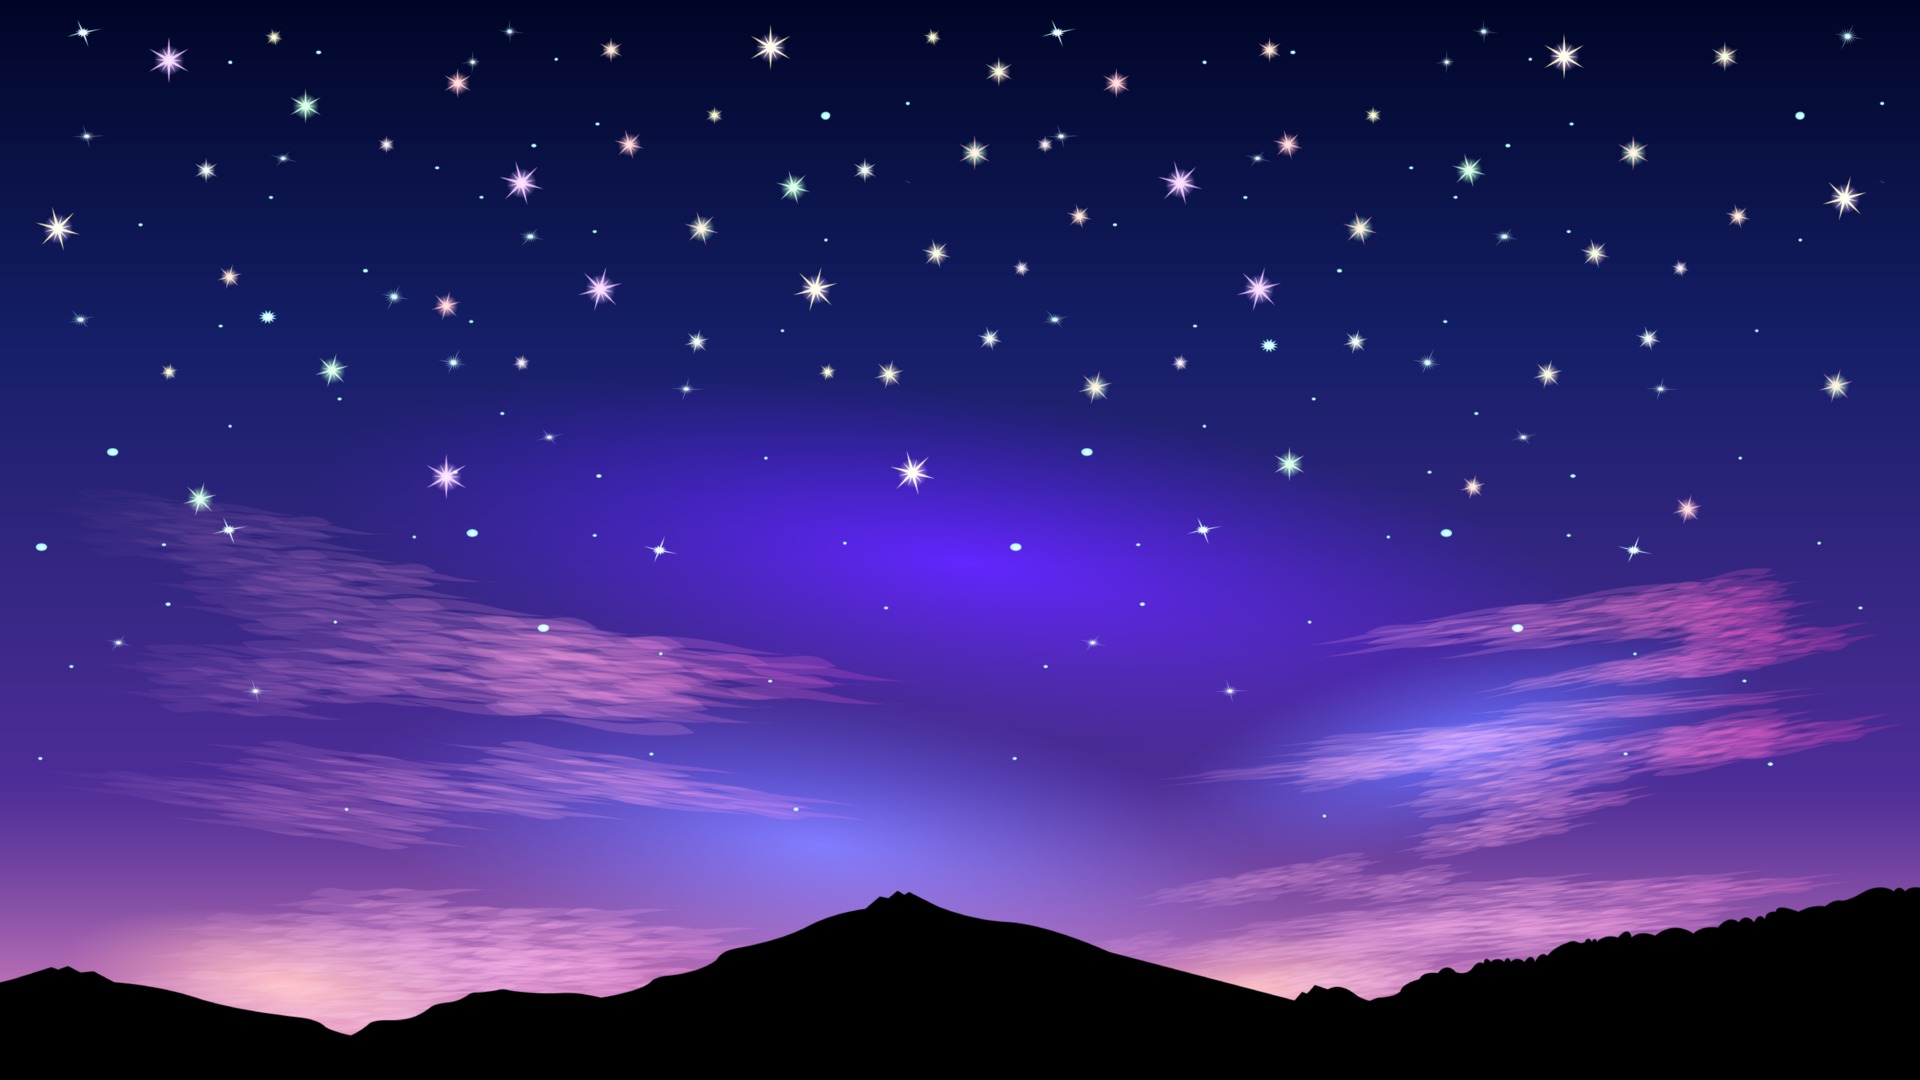 Night sky wallpaper Vectors  Illustrations for Free Download  Freepik